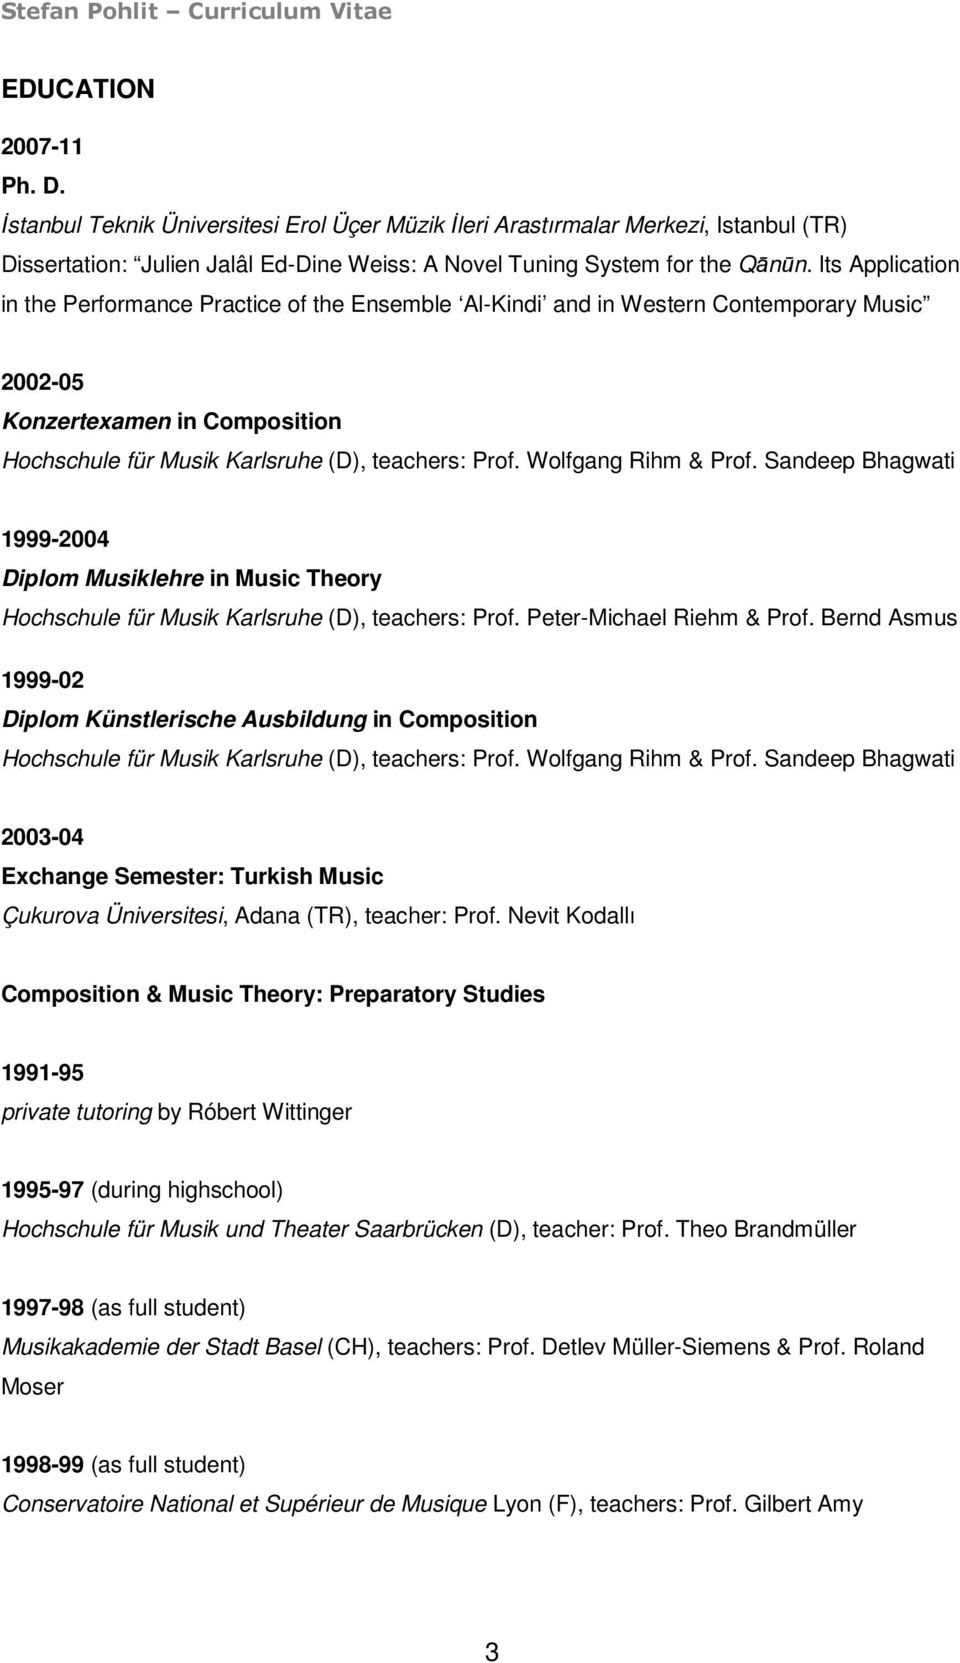 Wolfgang Rihm & Prof. Sandeep Bhagwati 1999-2004 Diplom Musiklehre in Music Theory Hochschule für Musik Karlsruhe (D), teachers: Prof. Peter-Michael Riehm & Prof.